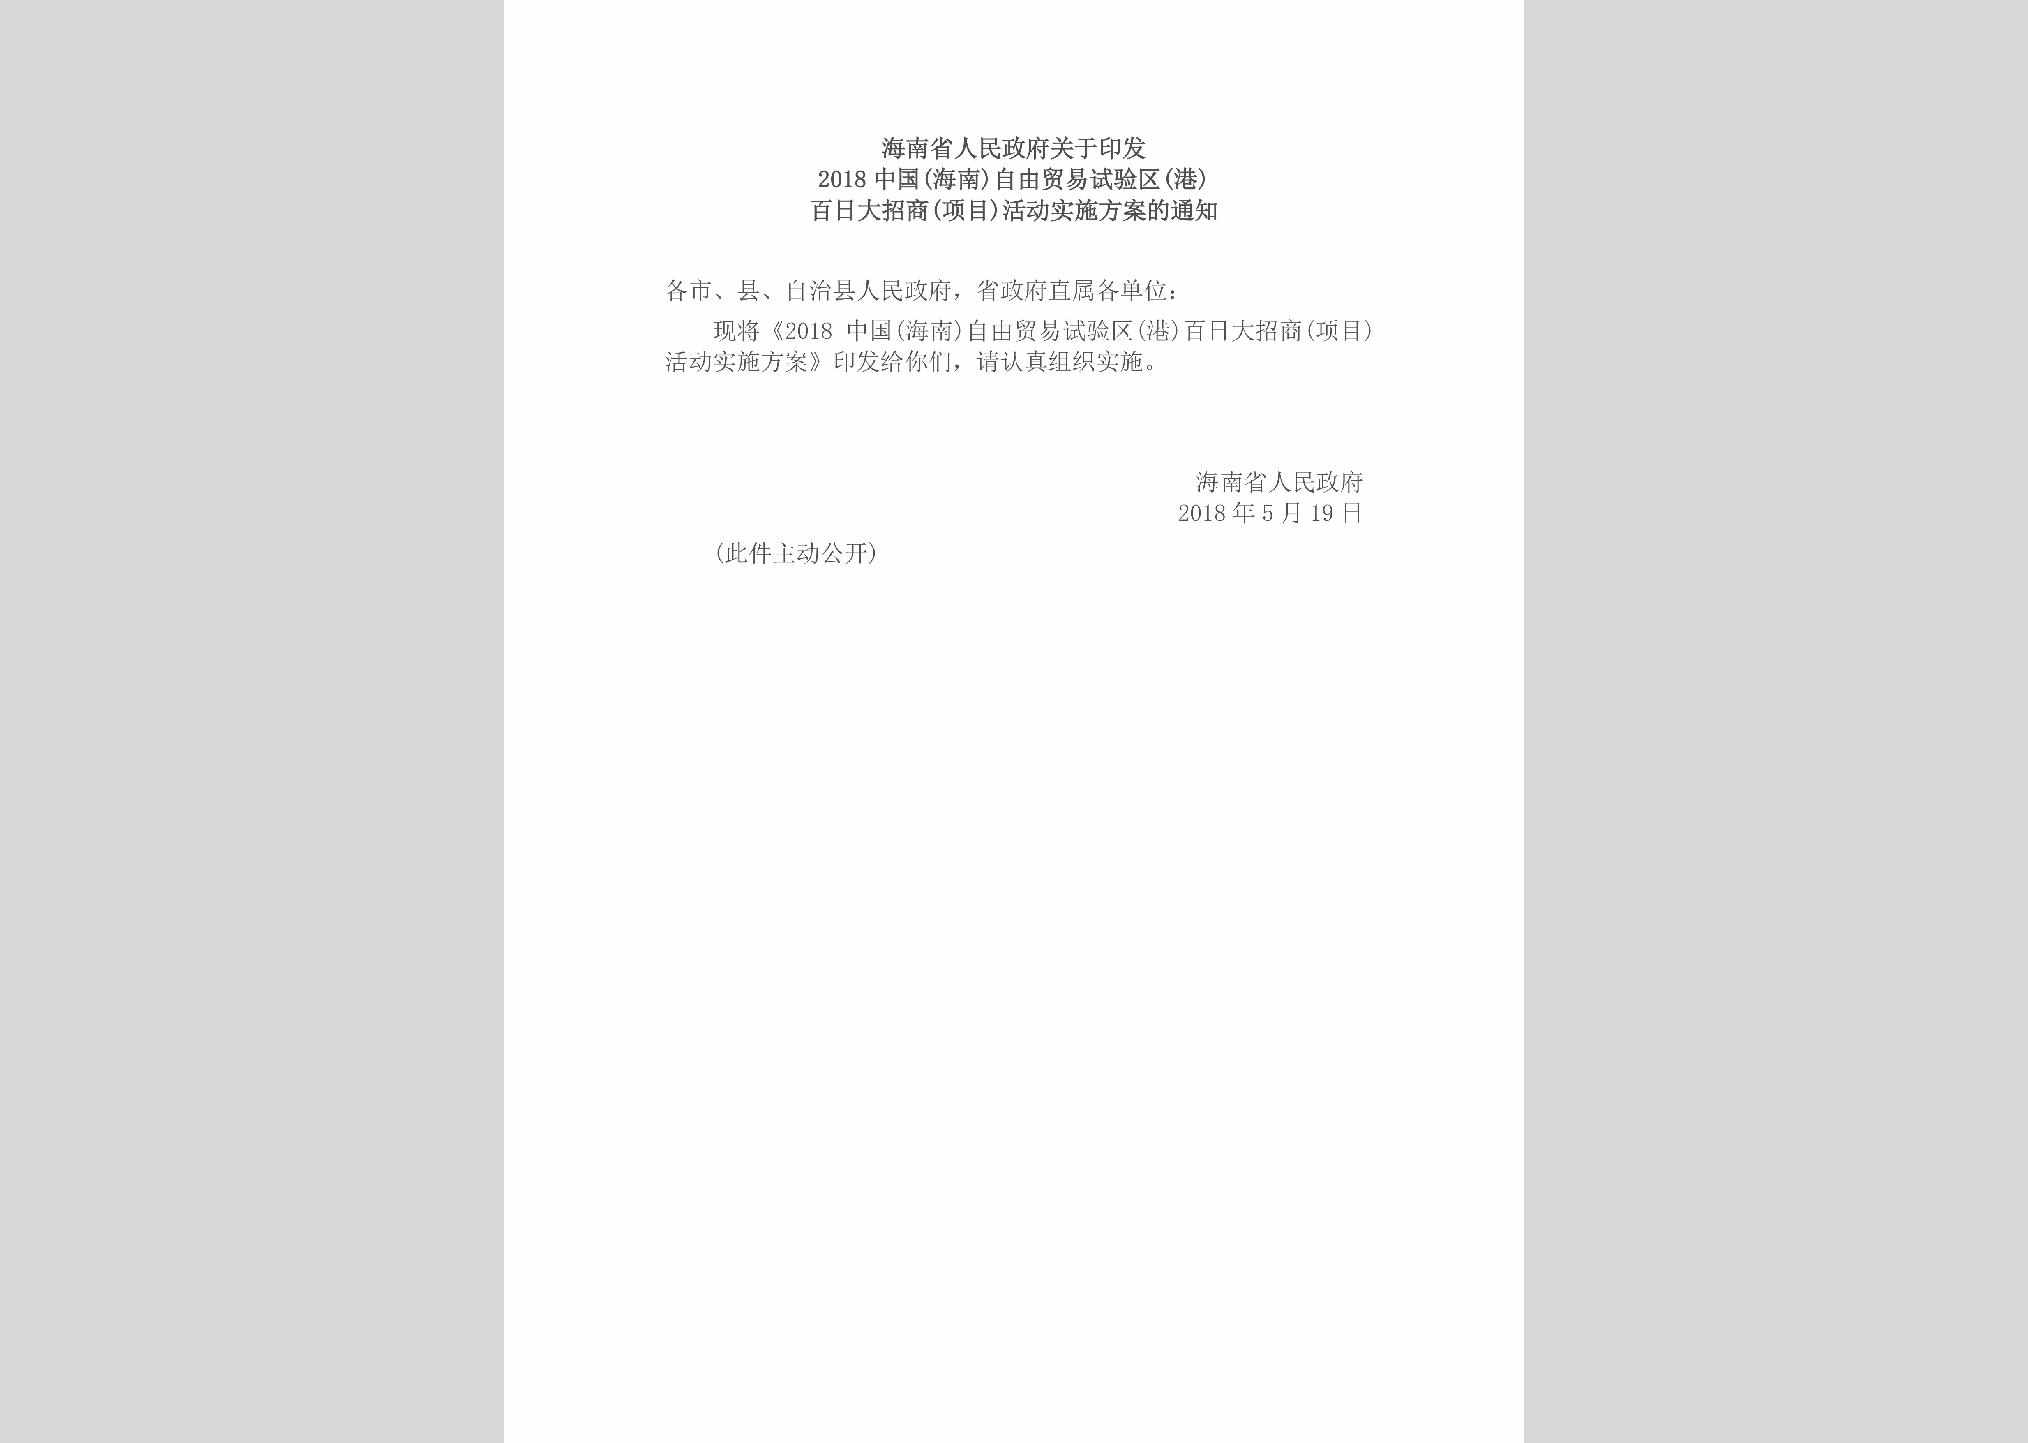 HAN-ZYMYSYTZ-2018：海南省人民政府关于印发2018中国(海南)自由贸易试验区(港)百日大招商(项目)活动实施方案的通知